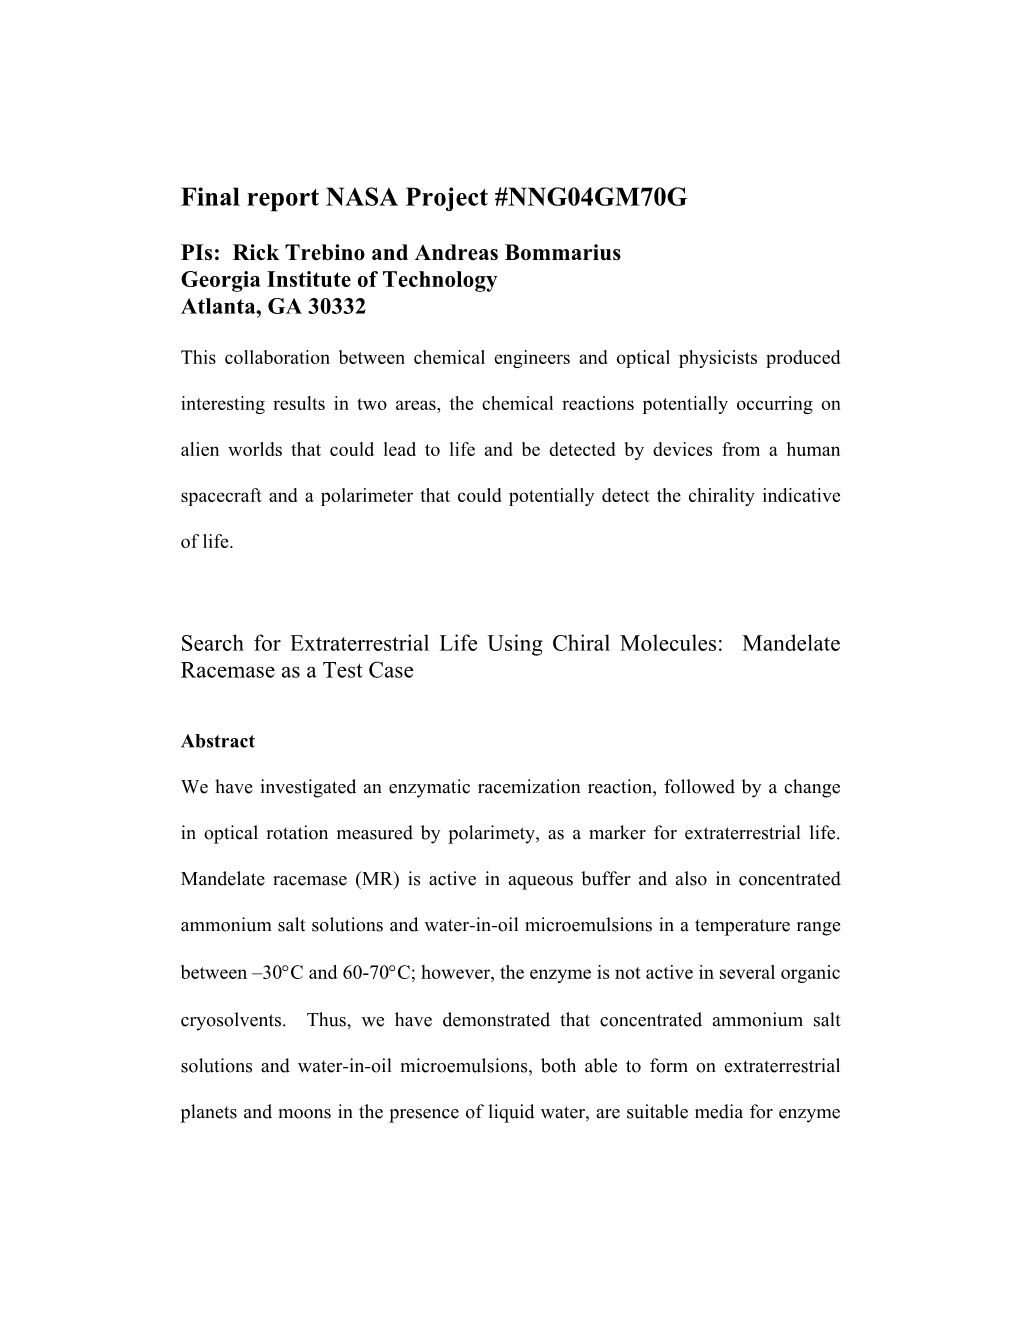 Final Report NASA Project #NNG04GM70G